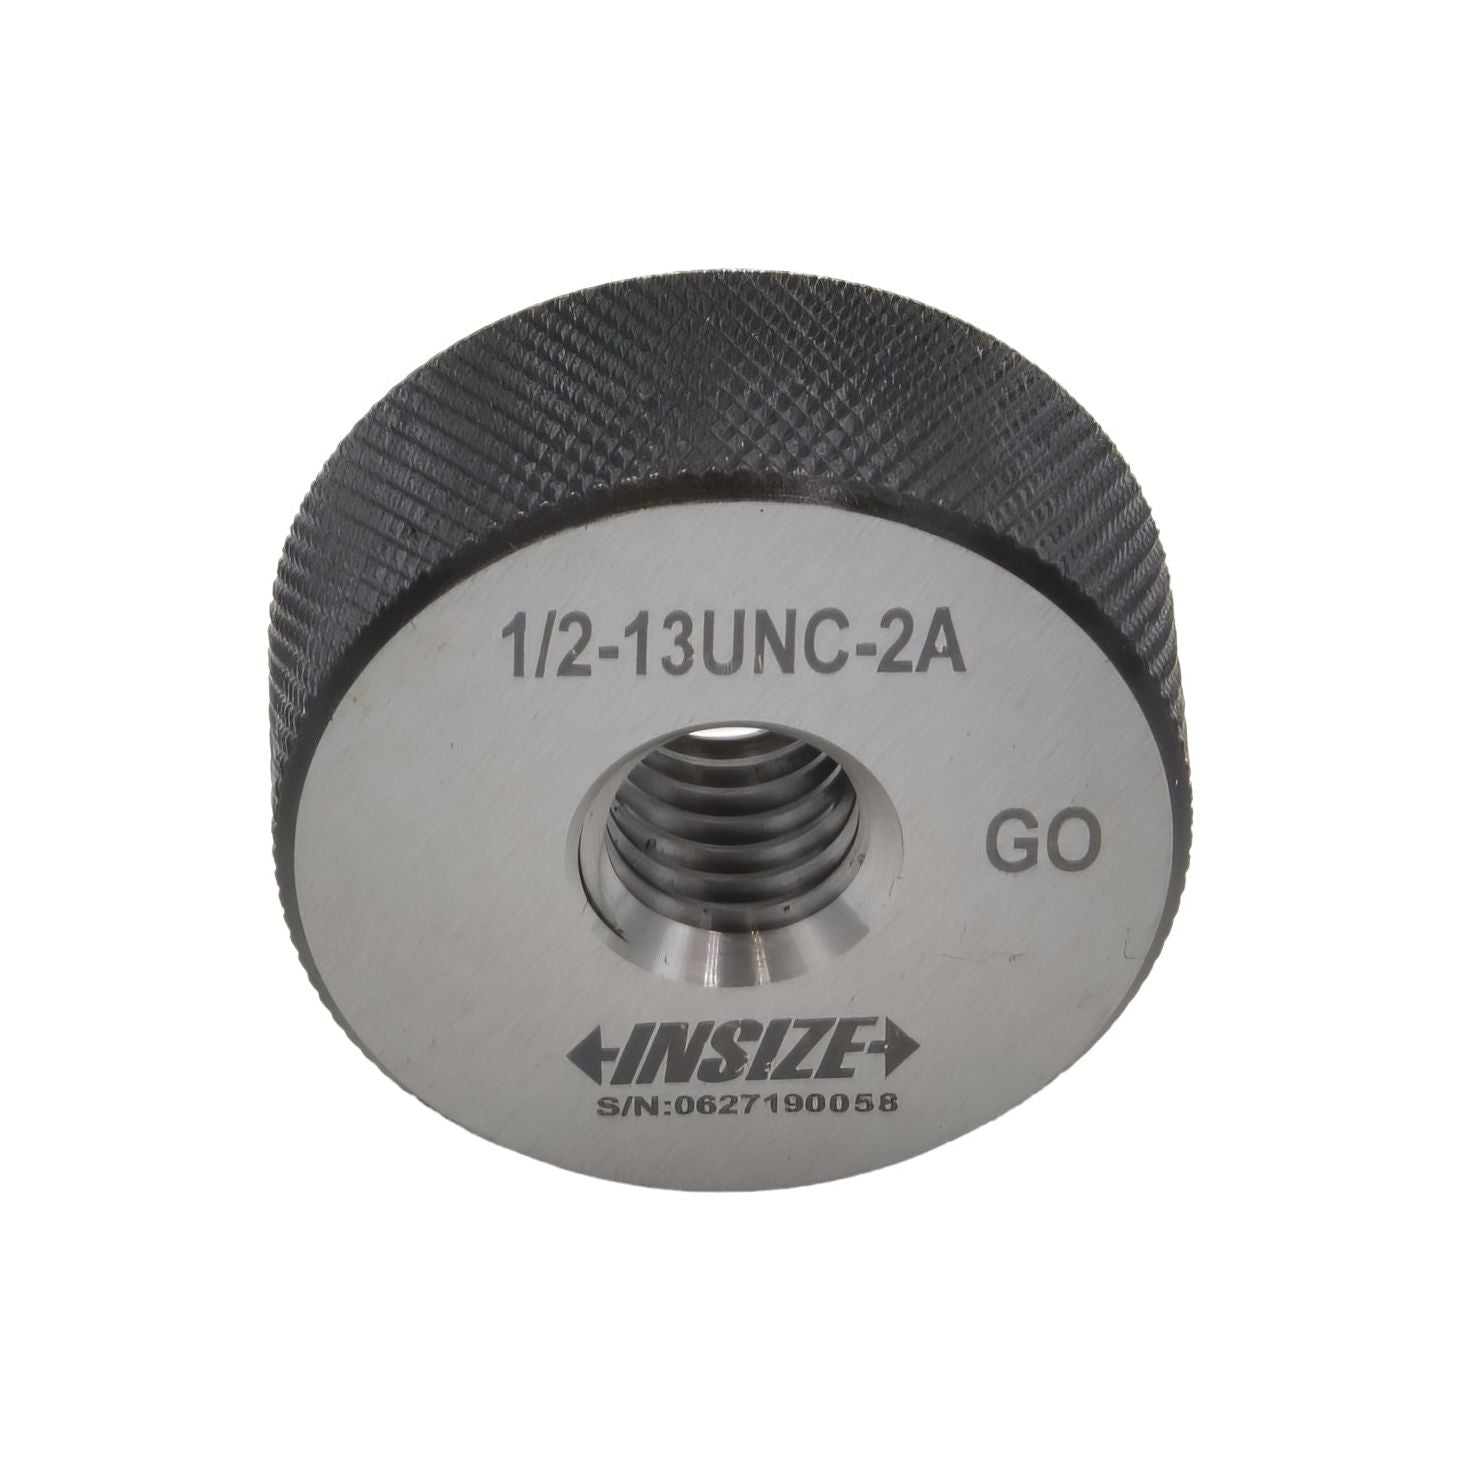 Insize Thread GO Ring Gauge 1/2"-13 UNC Series 4121-1A1 